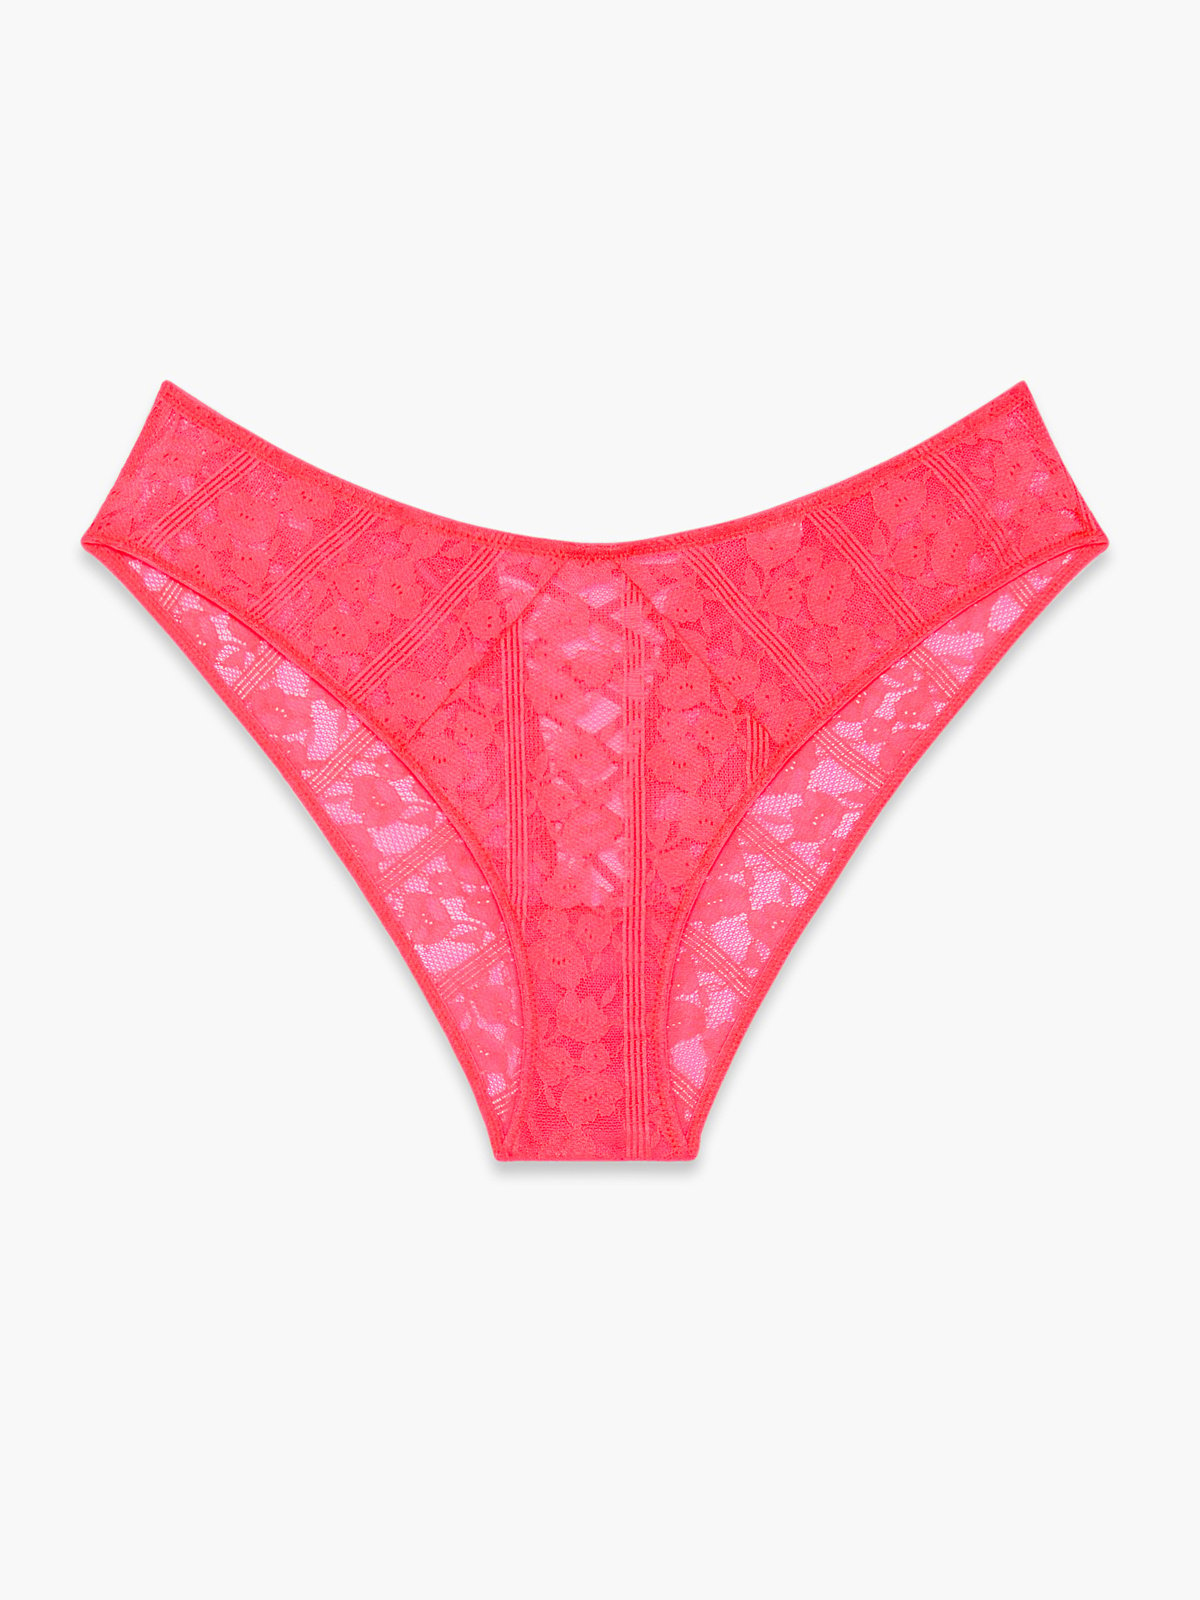 Garden Maze Cheeky Panty in Pink | SAVAGE X FENTY